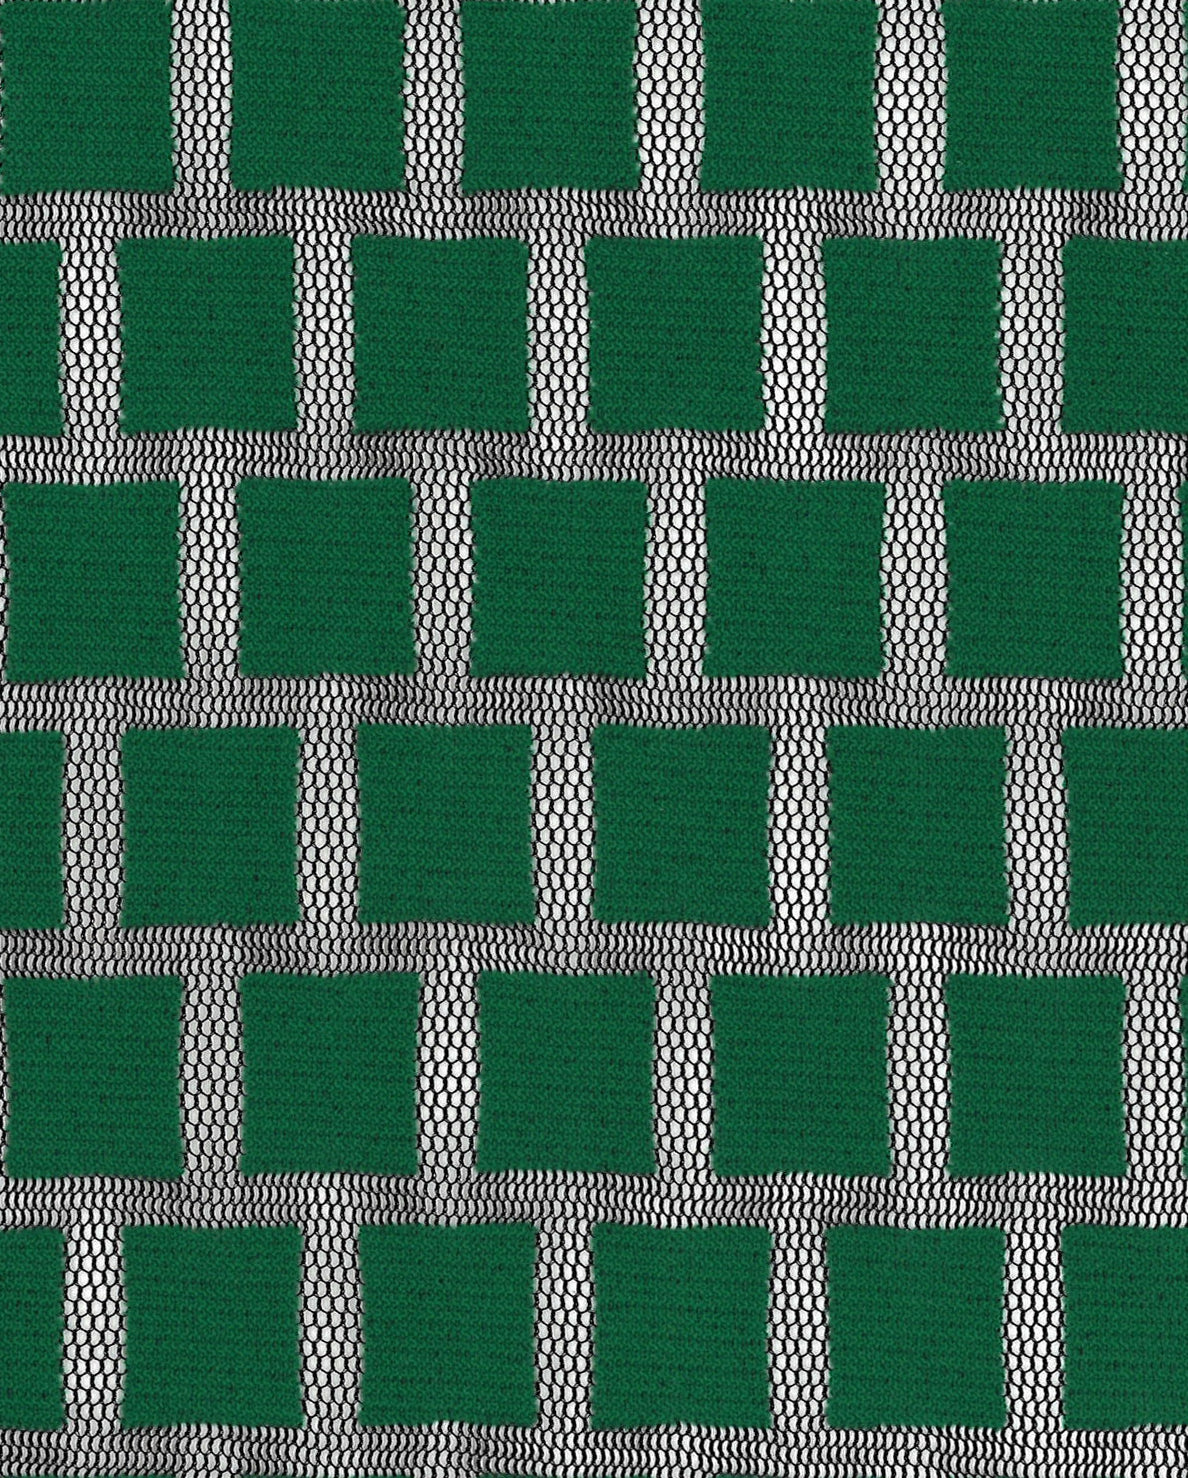 14029-03 Forest Green Knit Mesh Square Pattern Burn-Out Plain Dyed Blend blend burn-out green knit mesh nylon plain dyed polyester Burn-Out, Mesh - knit fabric - woven fabric - fabric company - fabric wholesale - fabric b2b - fabric factory - high quality fabric - hong kong fabric - fabric hk - acetate fabric - cotton fabric - linen fabric - metallic fabric - nylon fabric - polyester fabric - spandex fabric - chun wing hing - cwh hk - fabric worldwide ship - 針織布 - 梳織布 - 布料公司- 布料批發 - 香港布料 - 秦榮興